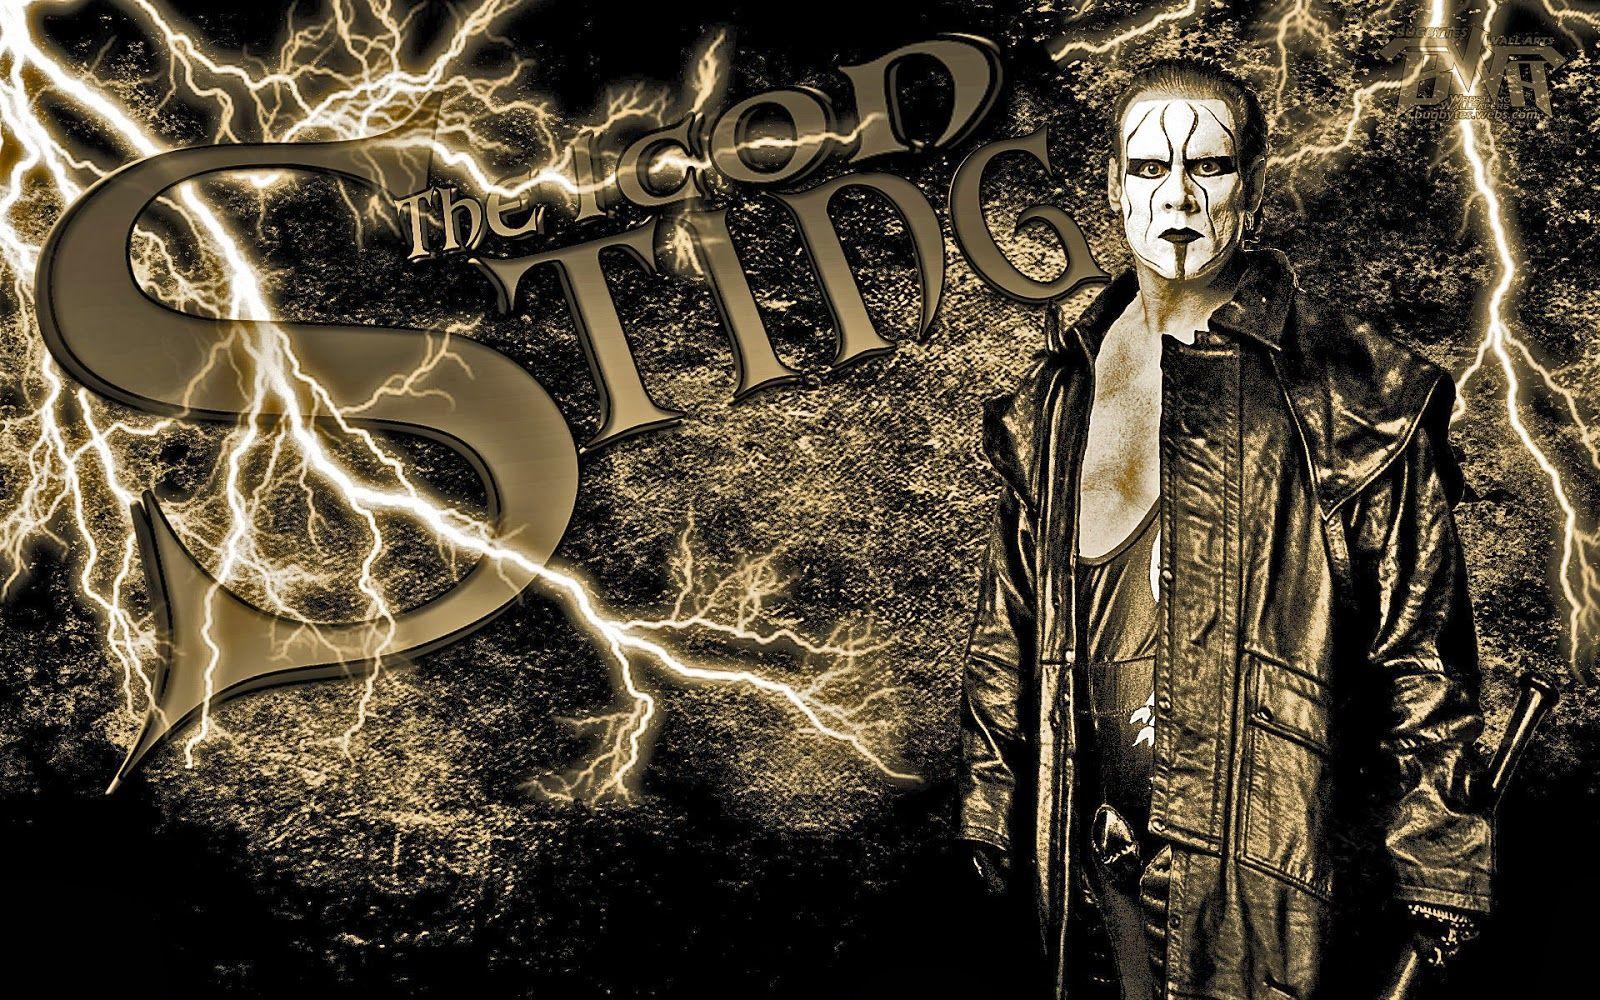 WWE Sting Wallpaper, HD Quality WWE Sting Image, WWE Sting